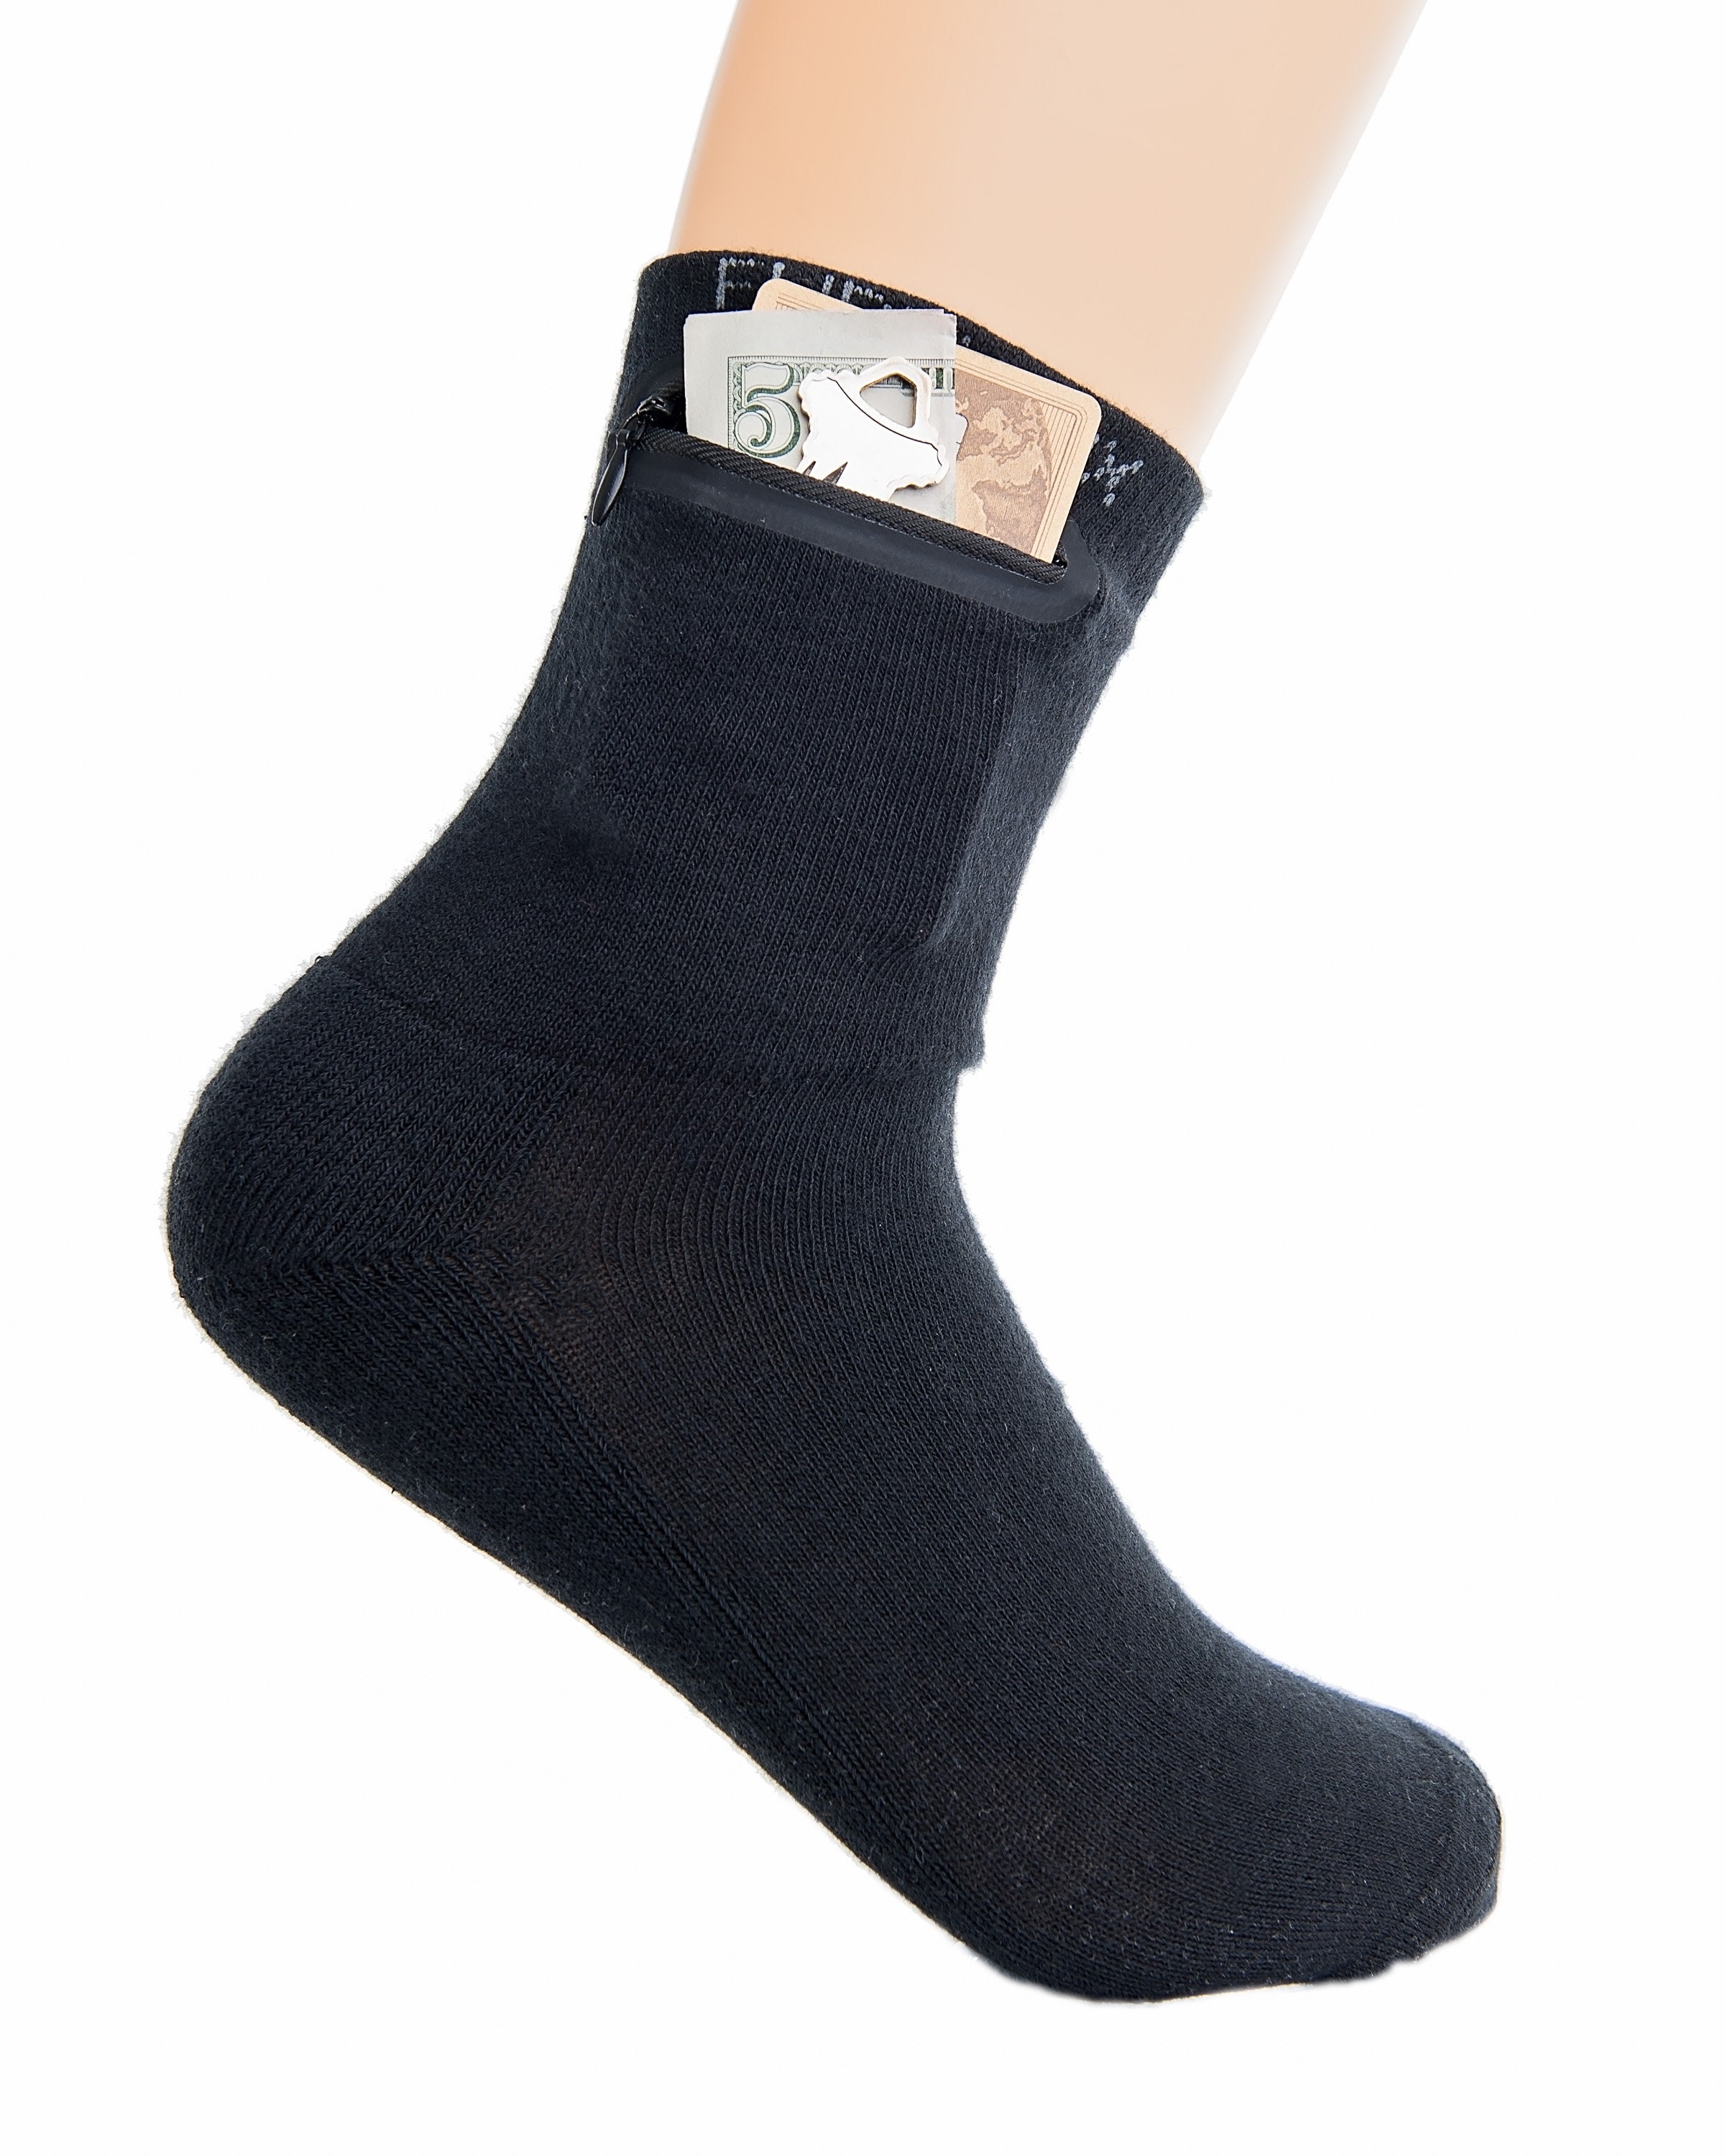 Men's Pocket Socks